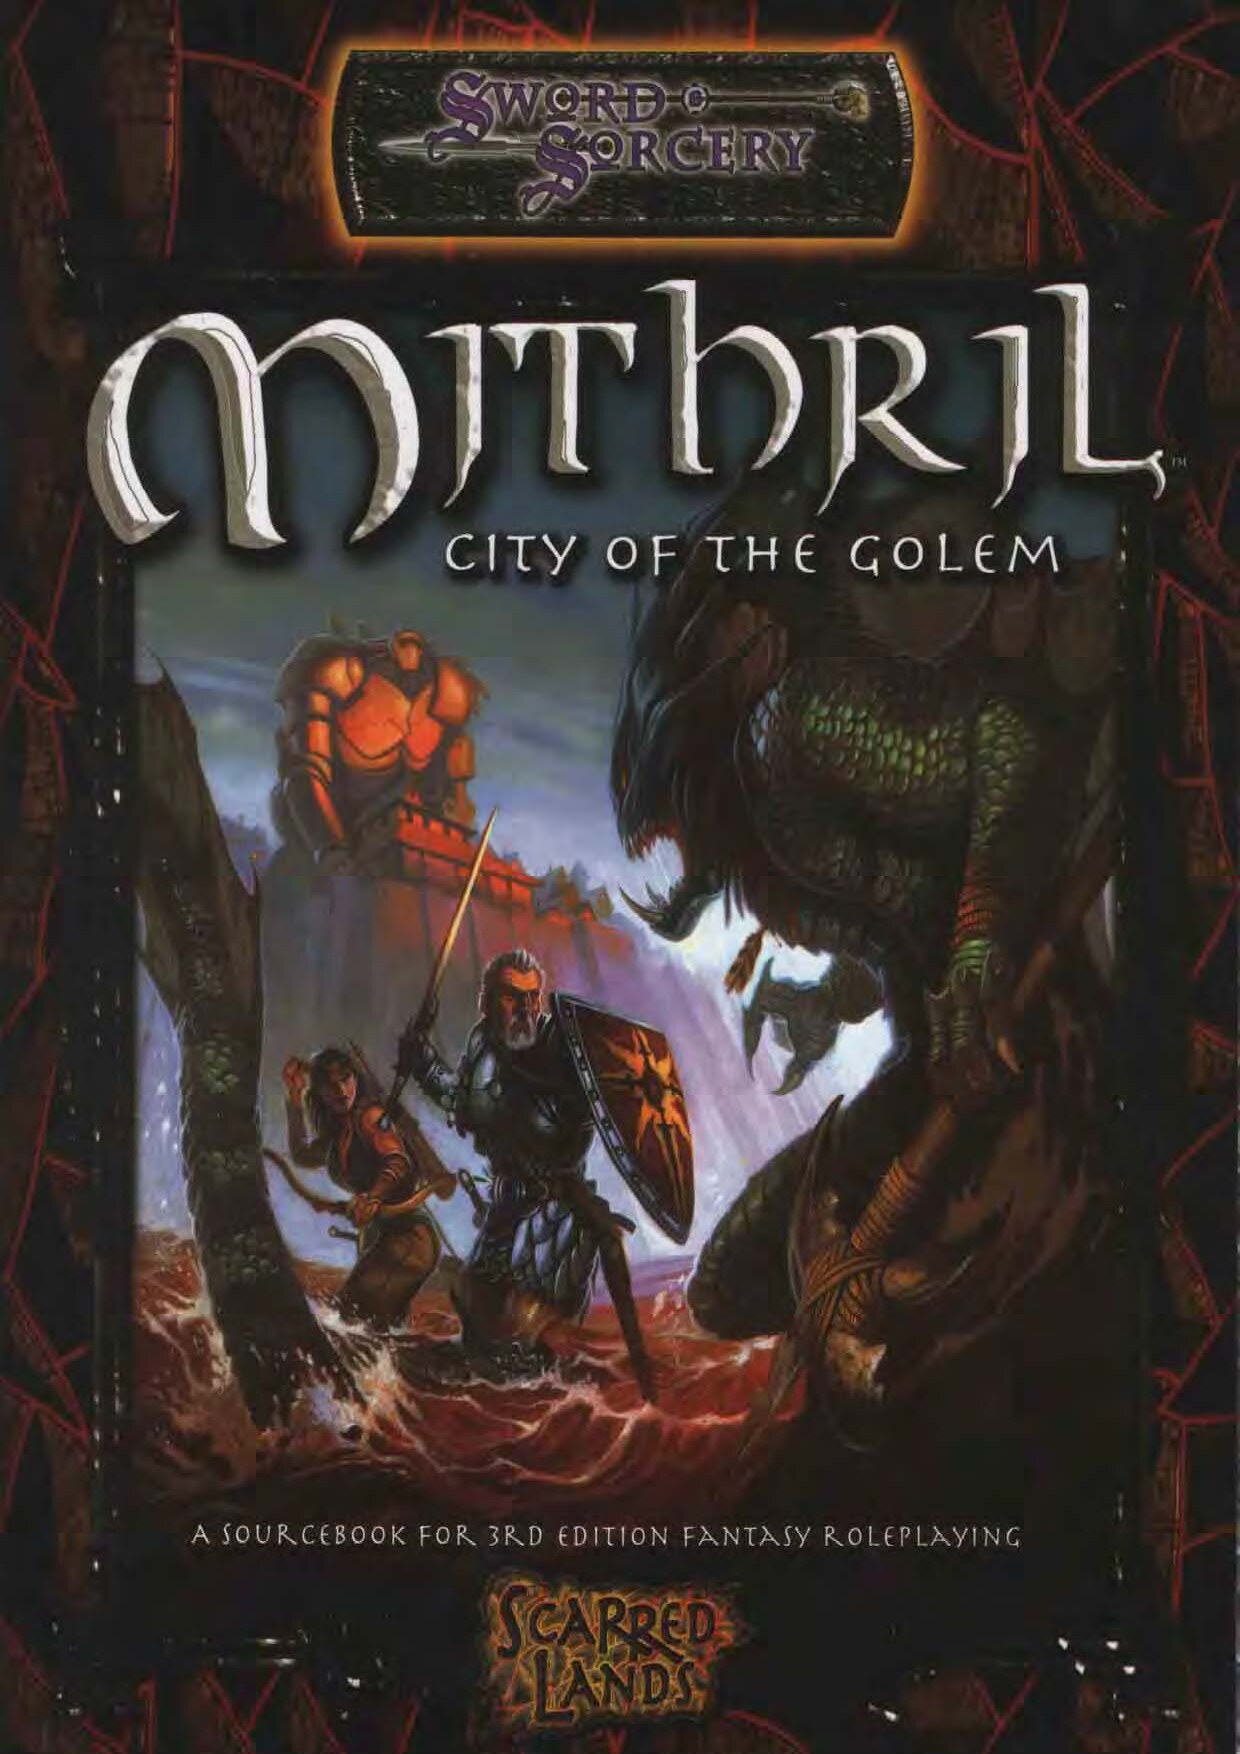 Mithril - City of the Golem